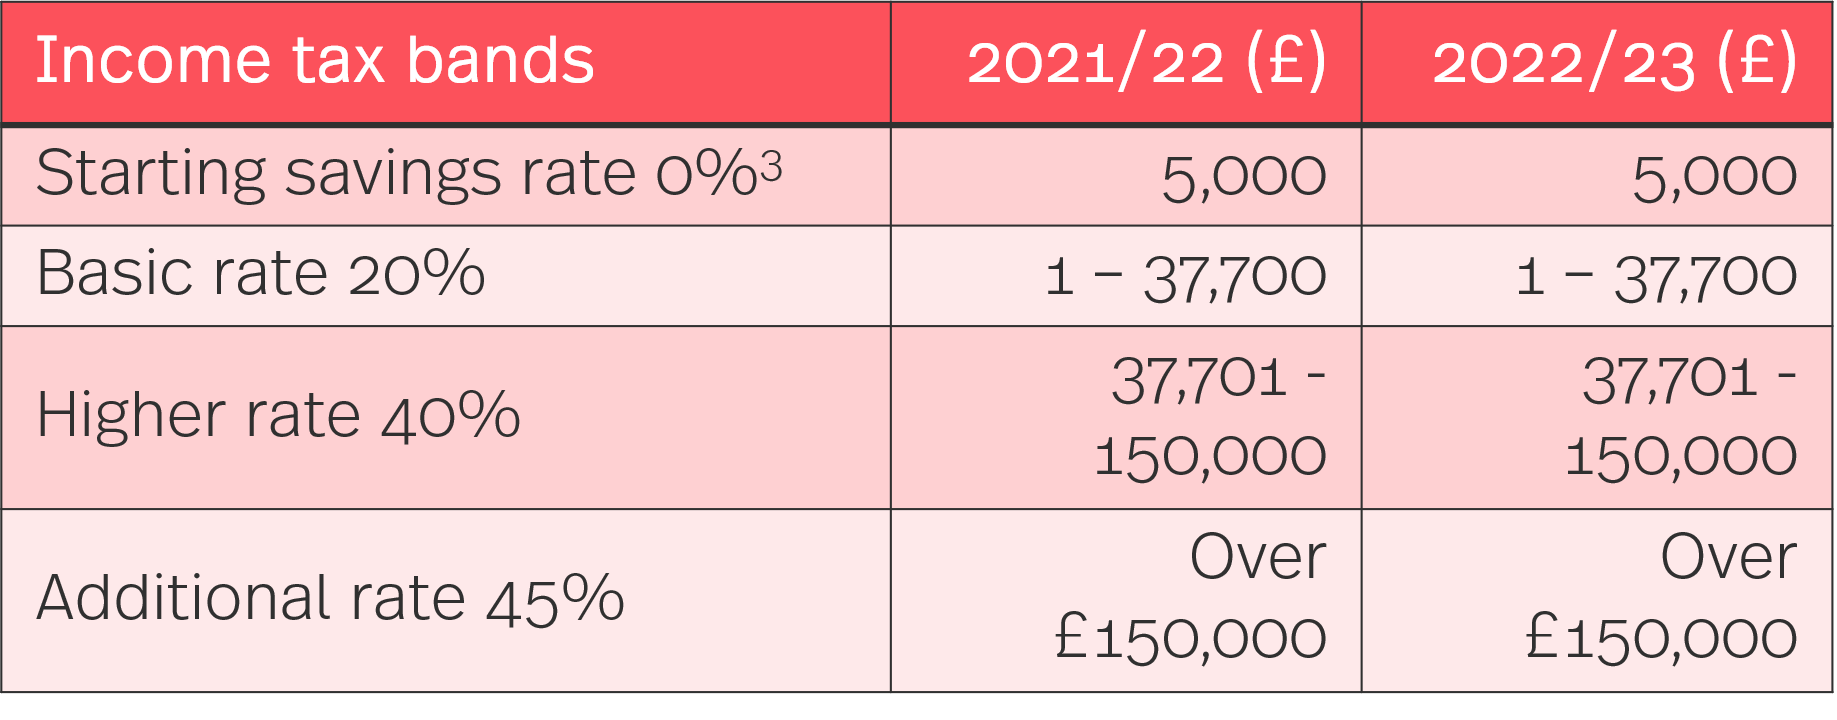 Hmrc Tax Rates For 2021 22 Tutorial Pics